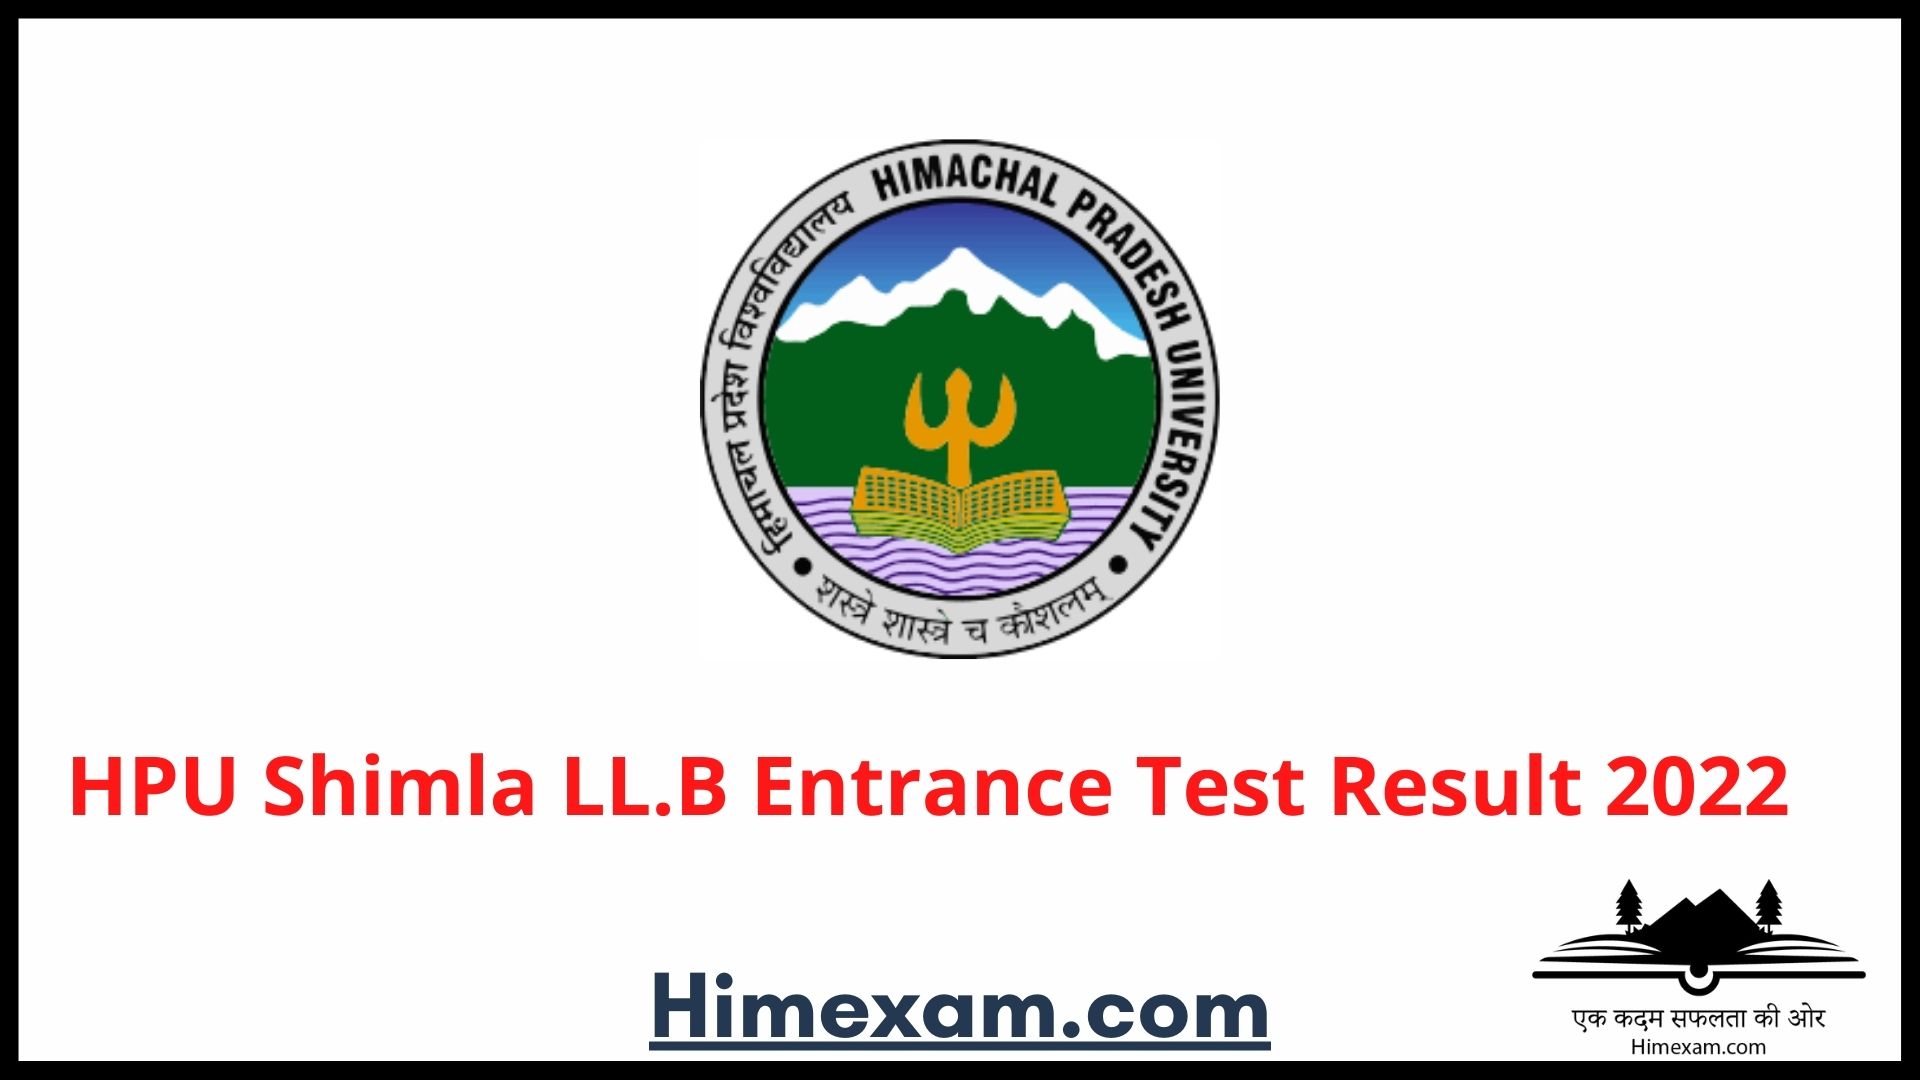 HPU Shimla LL.B Entrance Test Result 2022